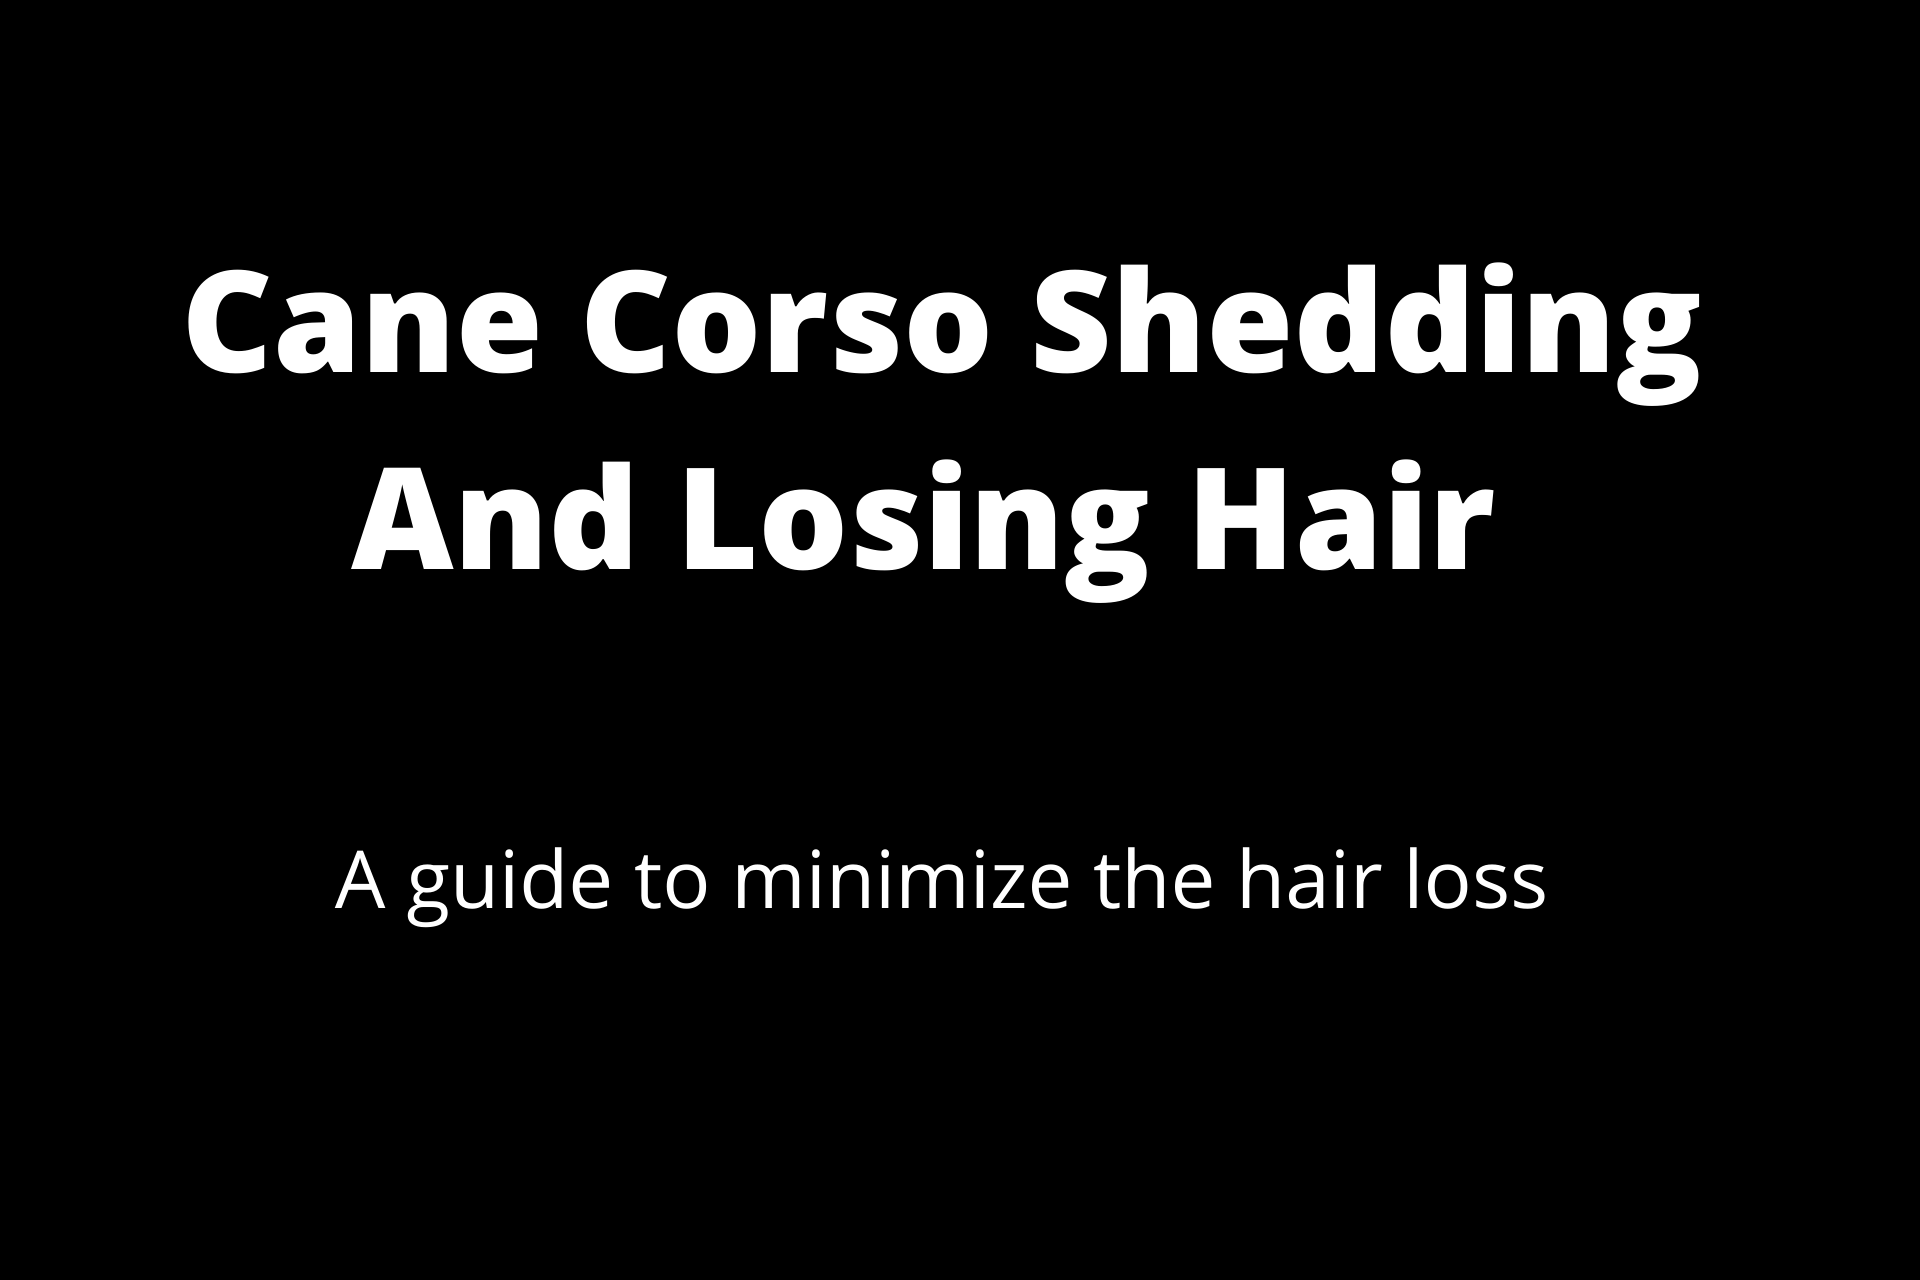 Cane Corso Shedding And Losing Hair